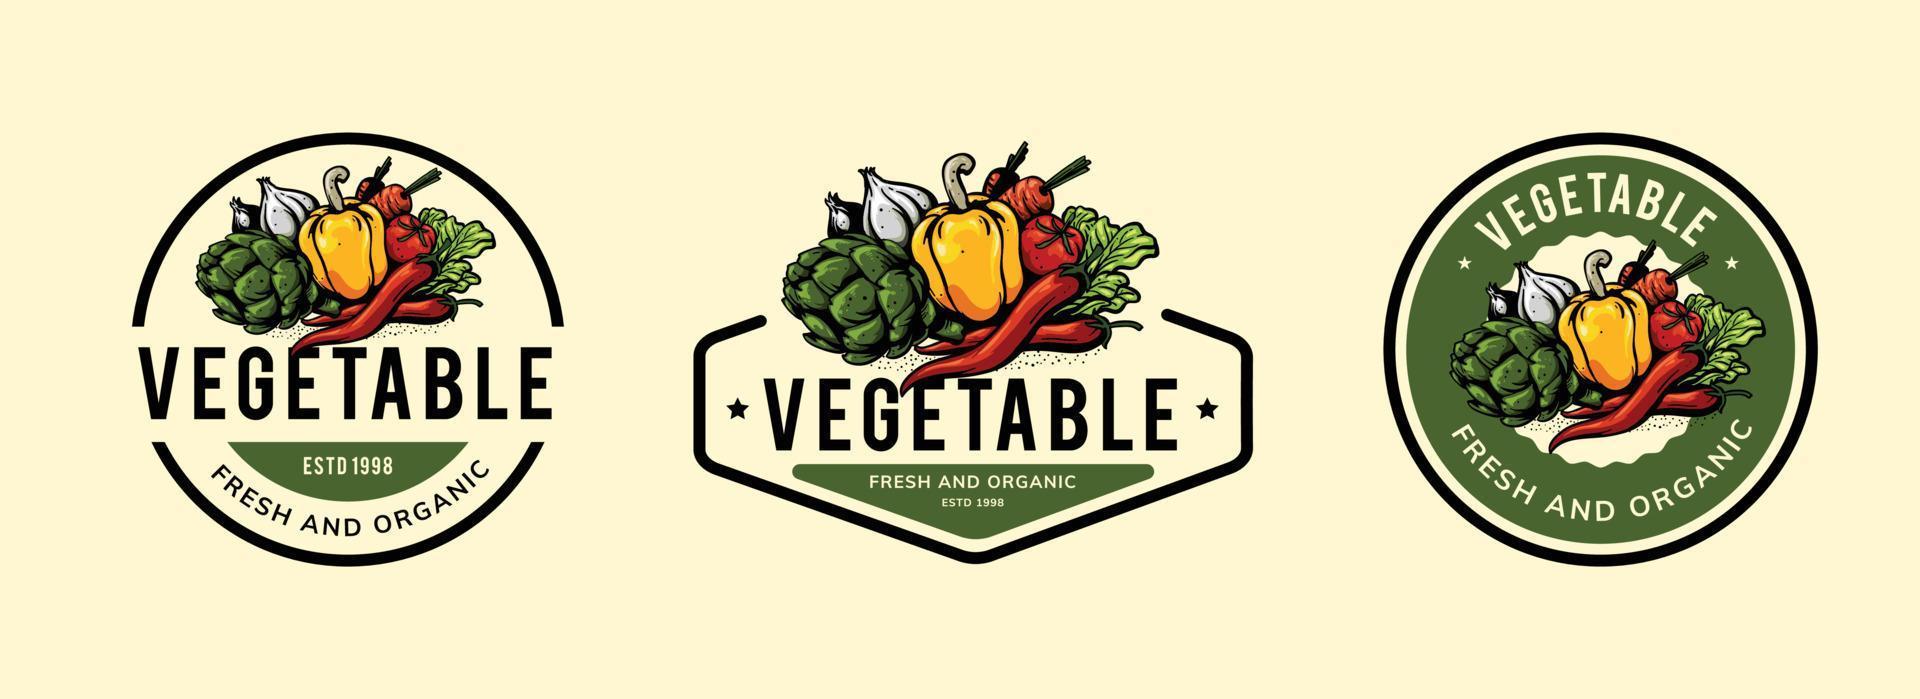 fruit and vegetable logo design vector